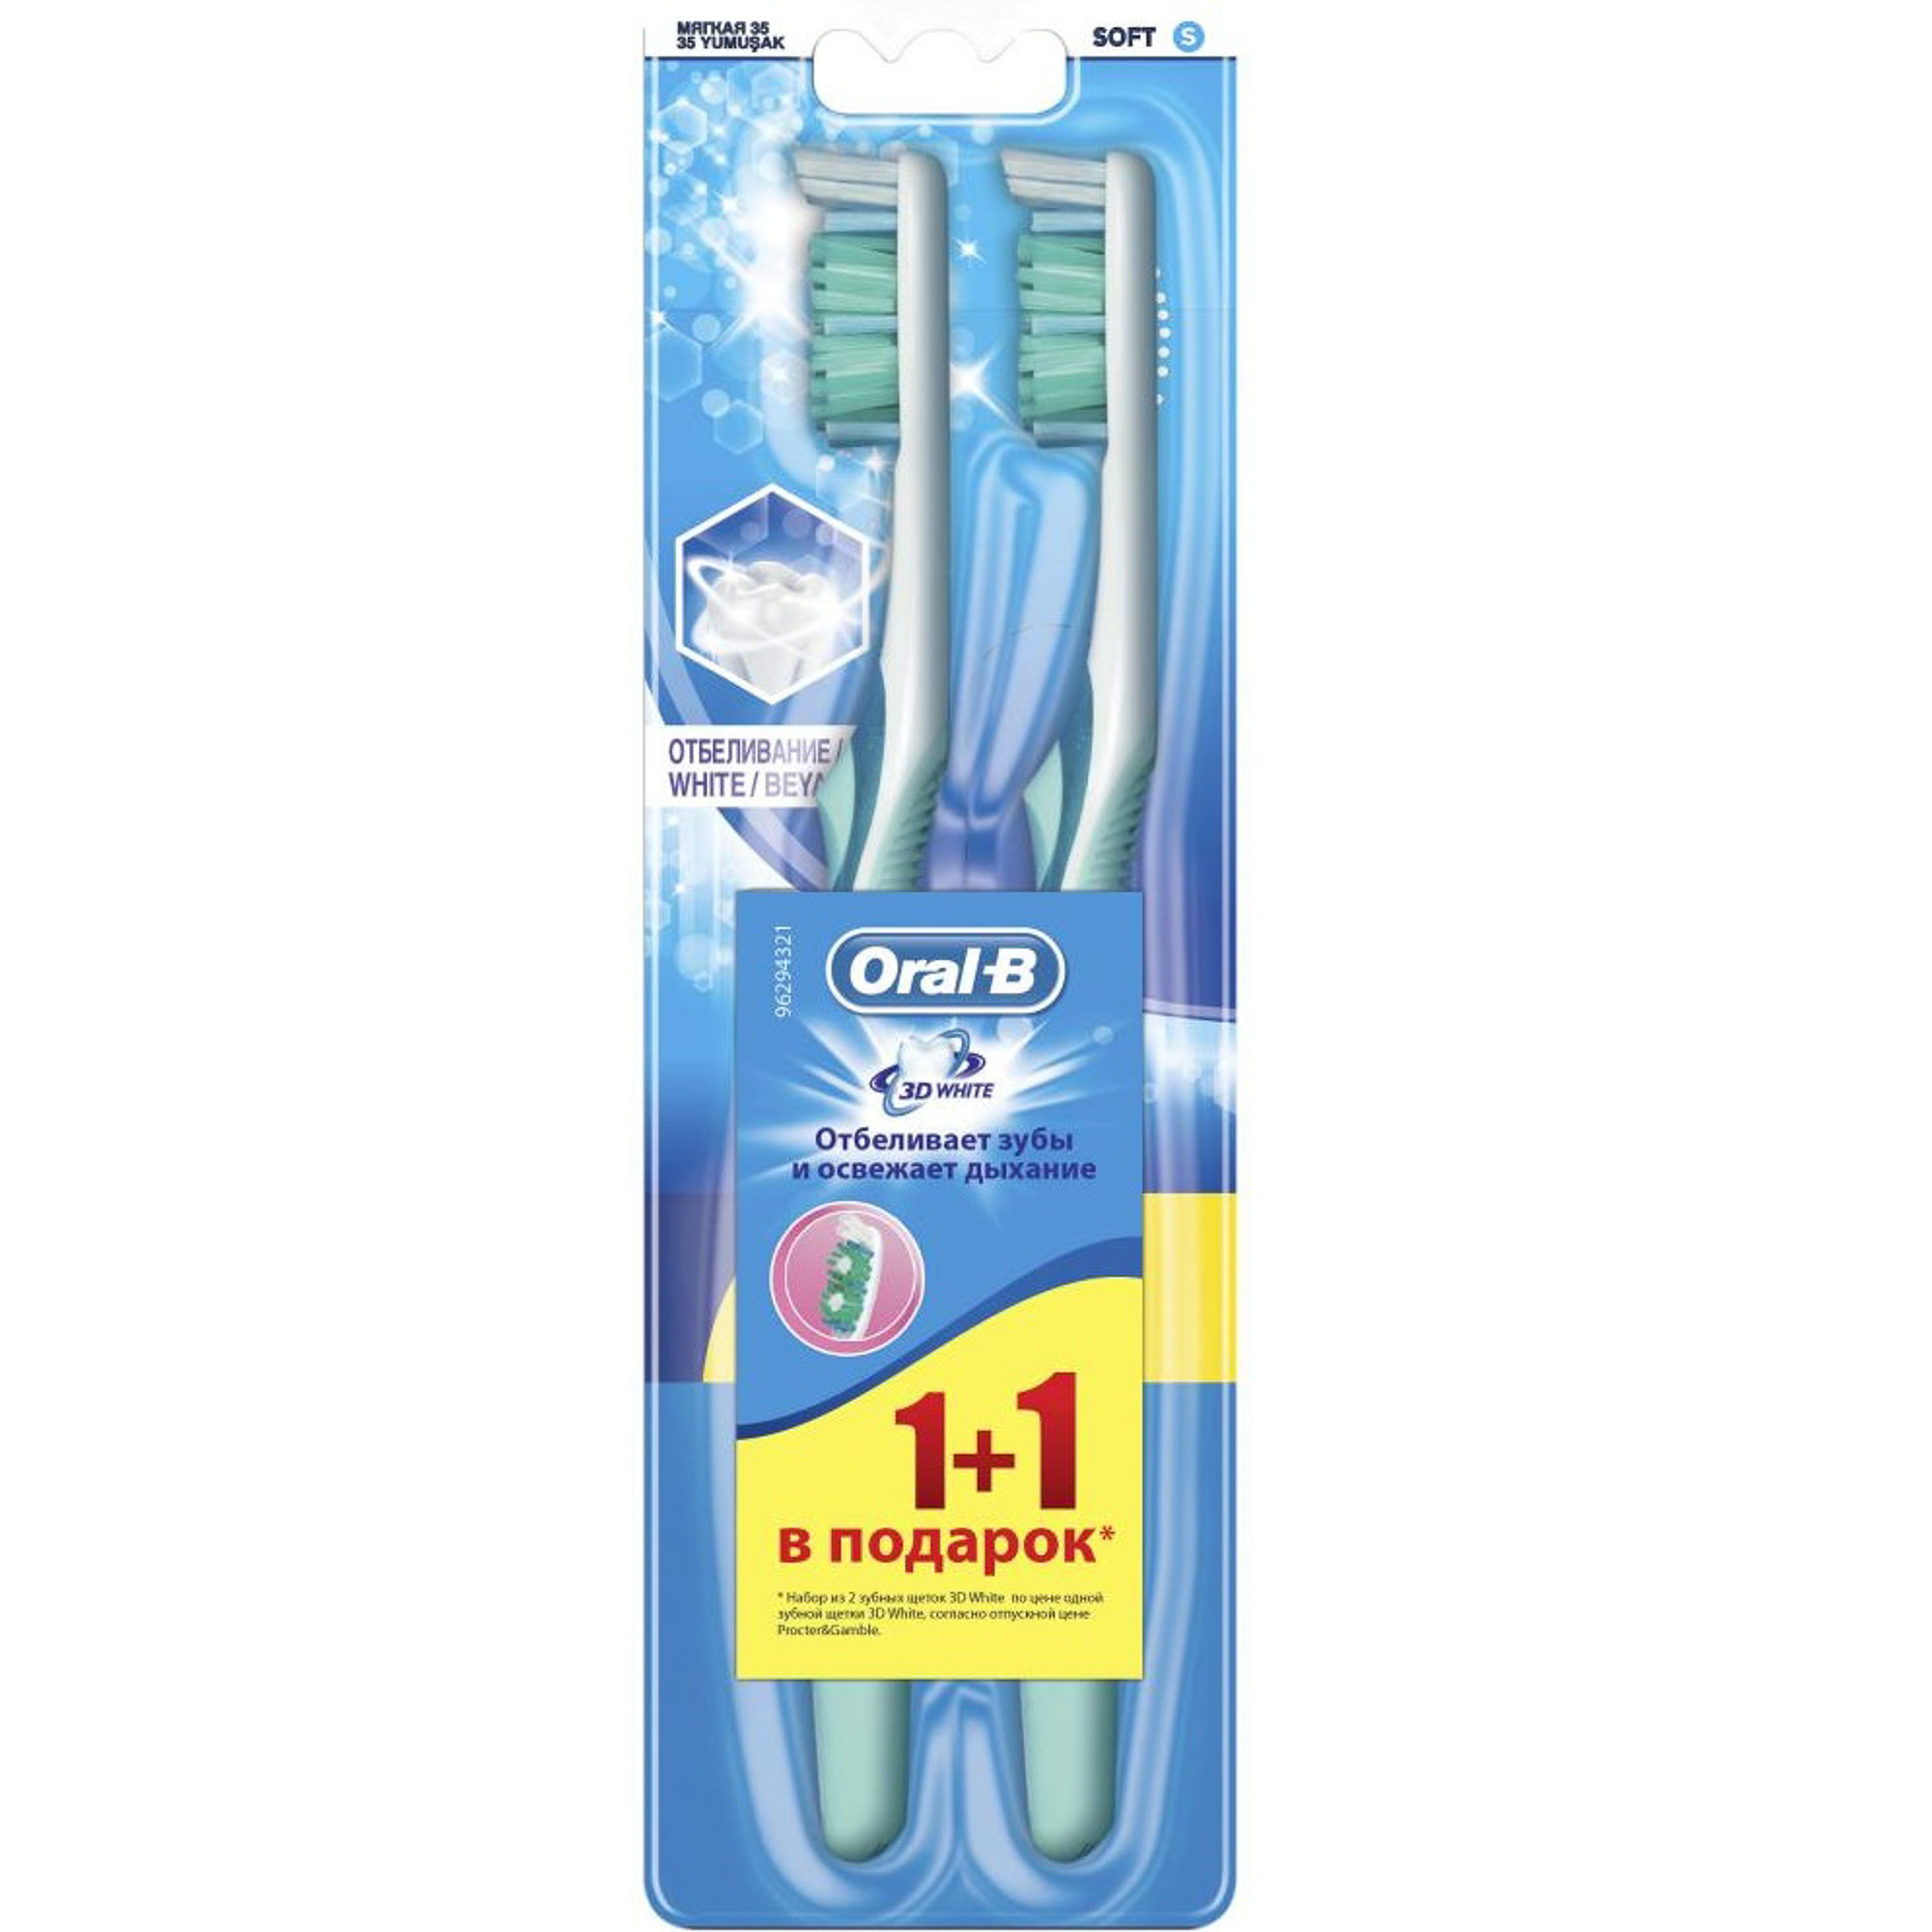 Набор зубных щеток Oral-B 1+1 3D White Отбеливание